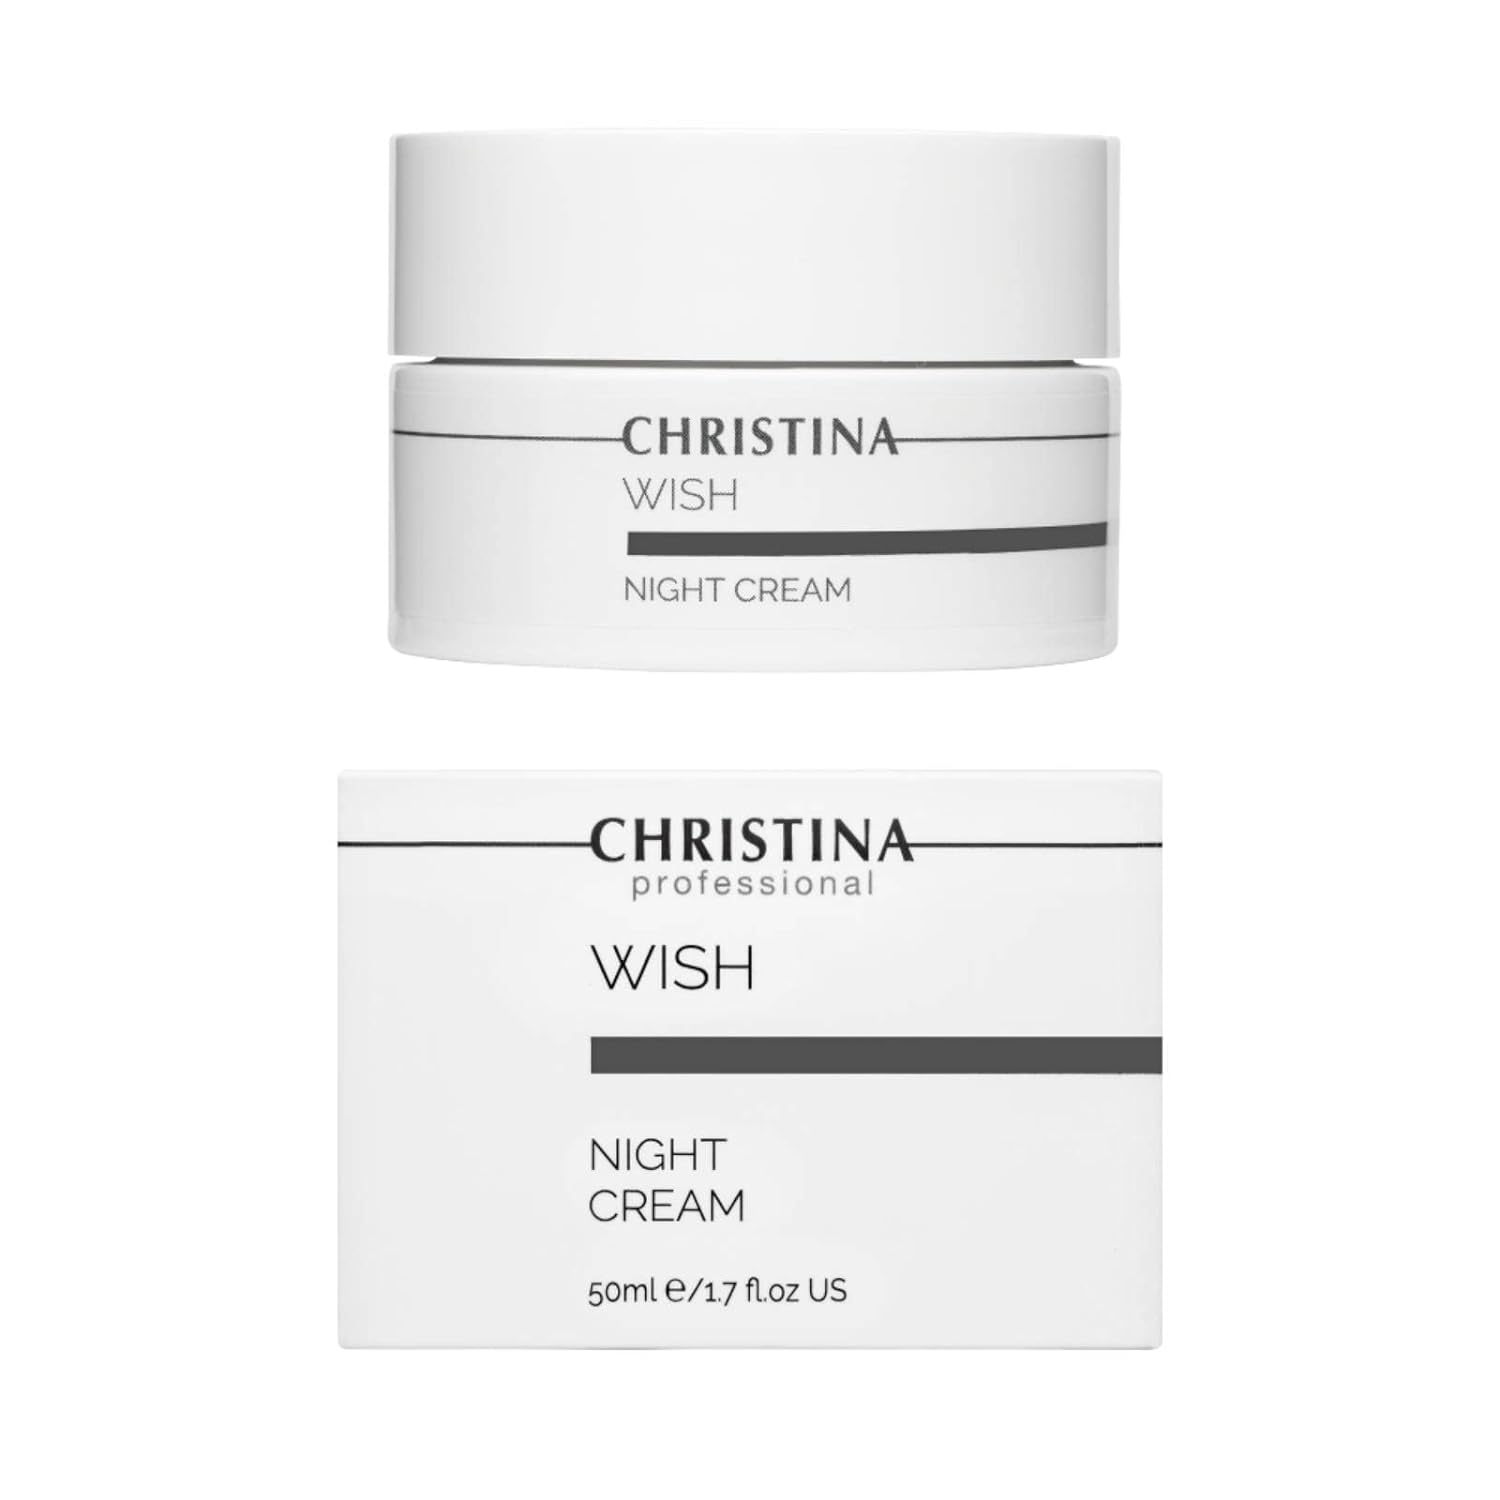 Esupli.com -CHRISTINA- Wish - Night Cream For Normal And Dry Skin 50ml